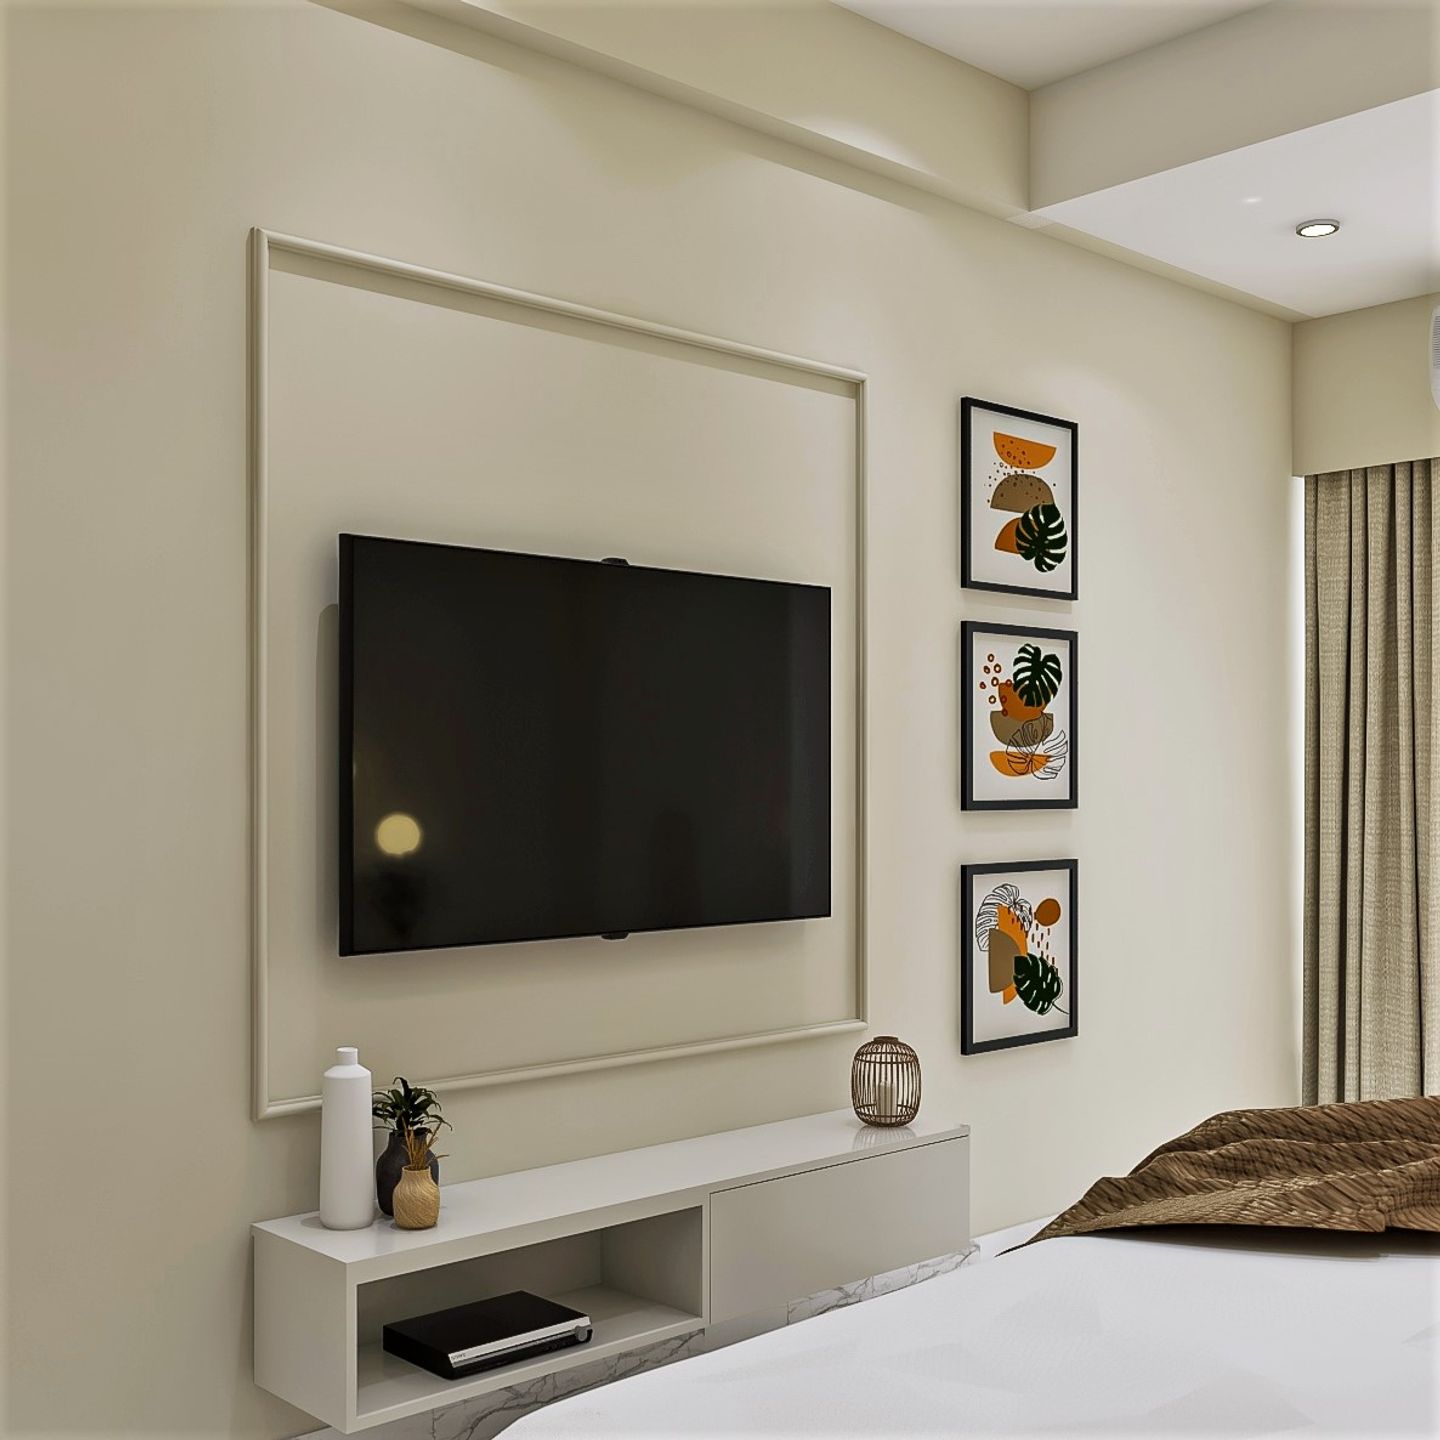 Spacious Guest Room Design With Contemporary Interiors - Livspace